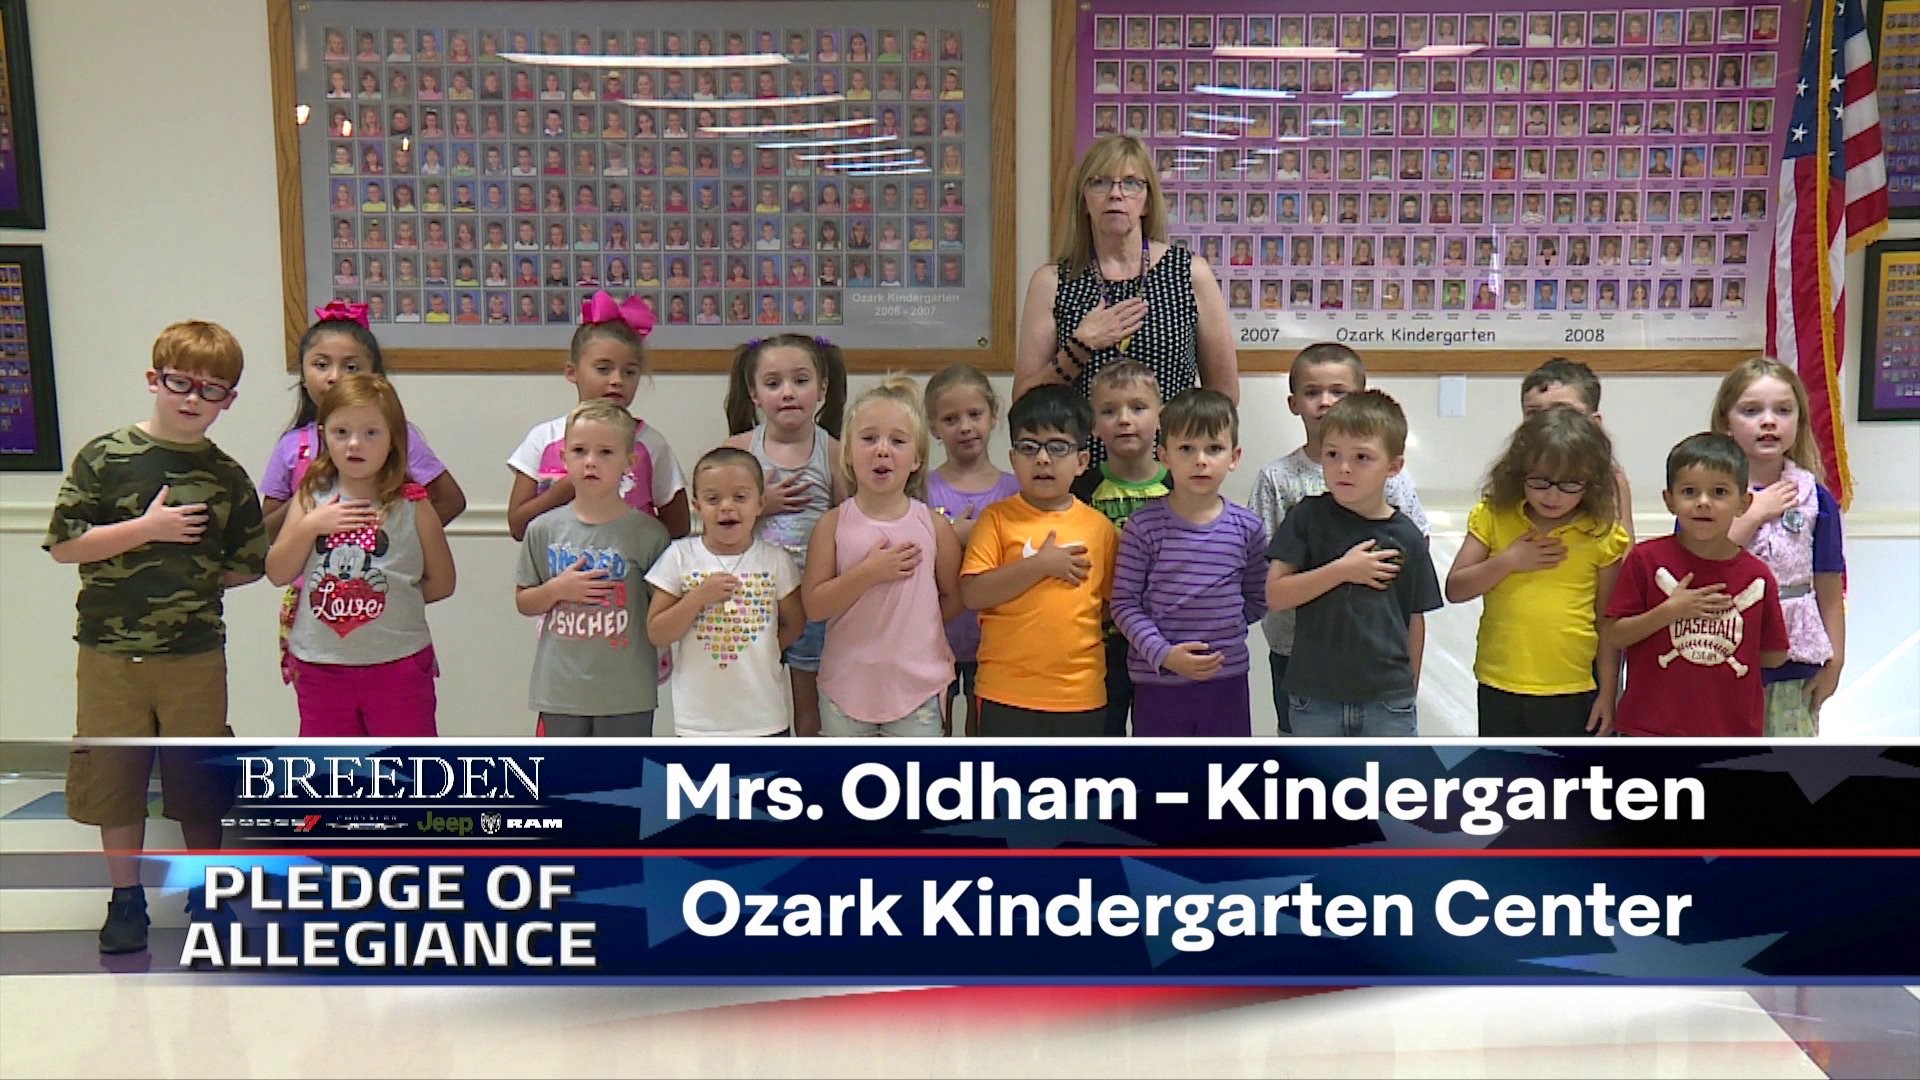 Mrs. Oldham Kindergarten, Ozark Kindergarten Center